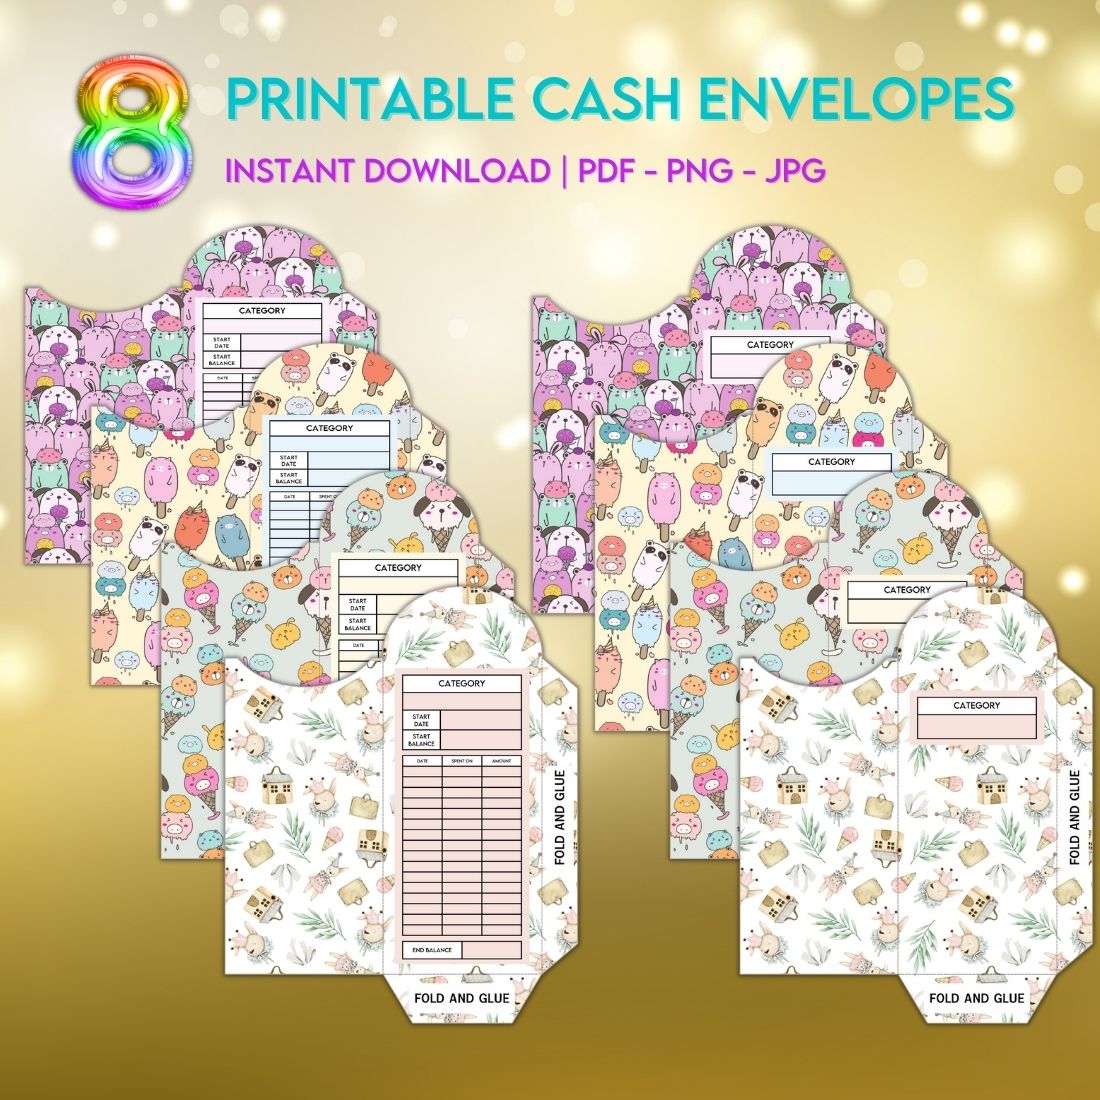 8 Printable Cash Envelopes #2 preview image.